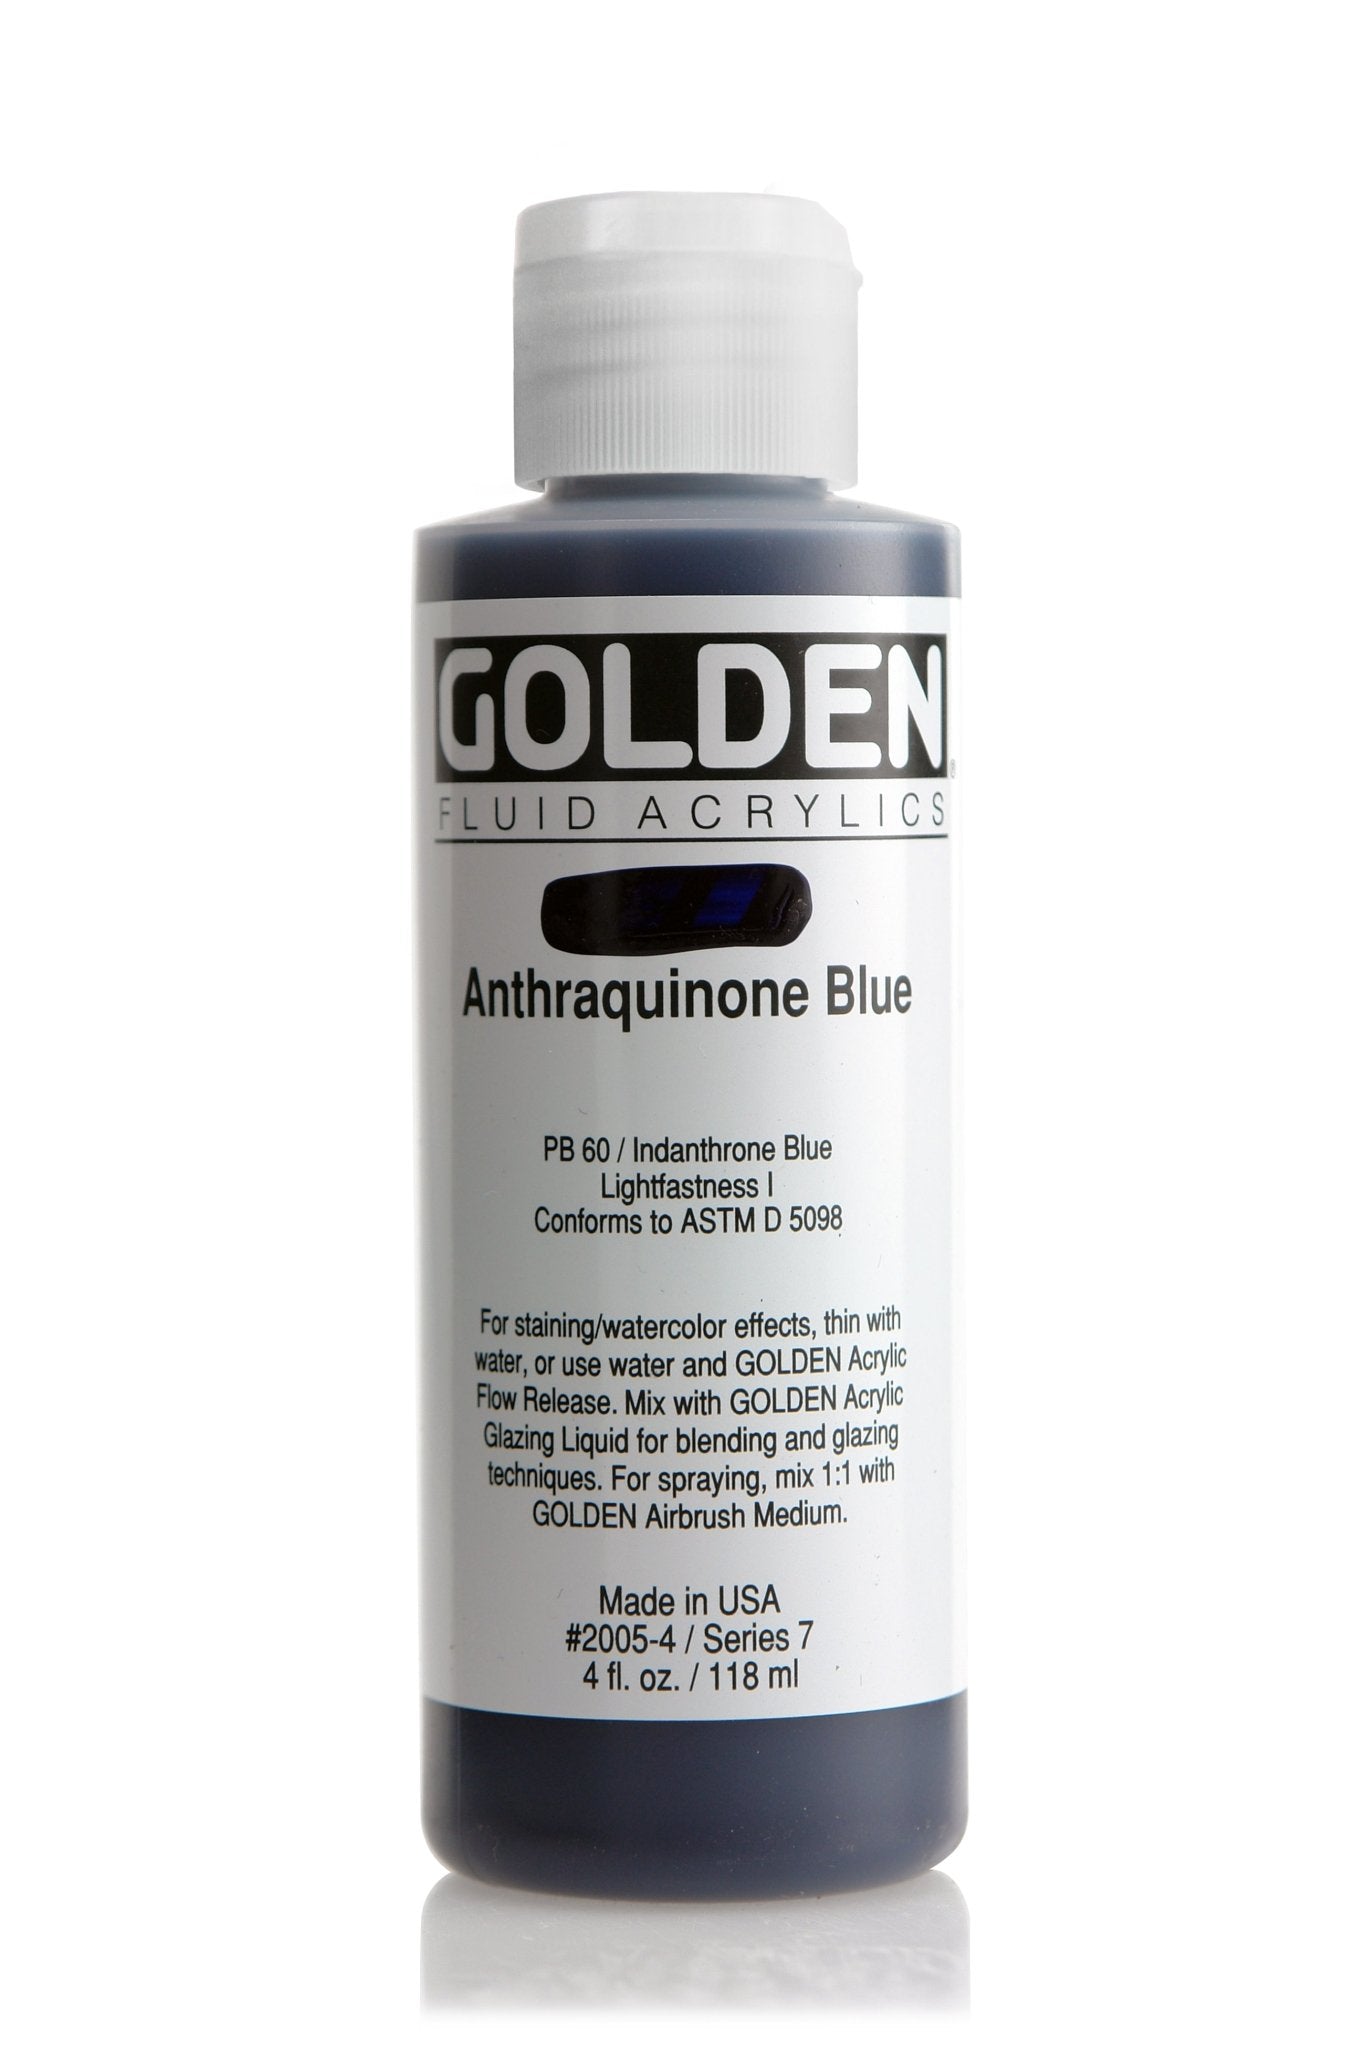 Golden Fluid Acrylic 118ml Anthraquinone Blue - theartshop.com.au